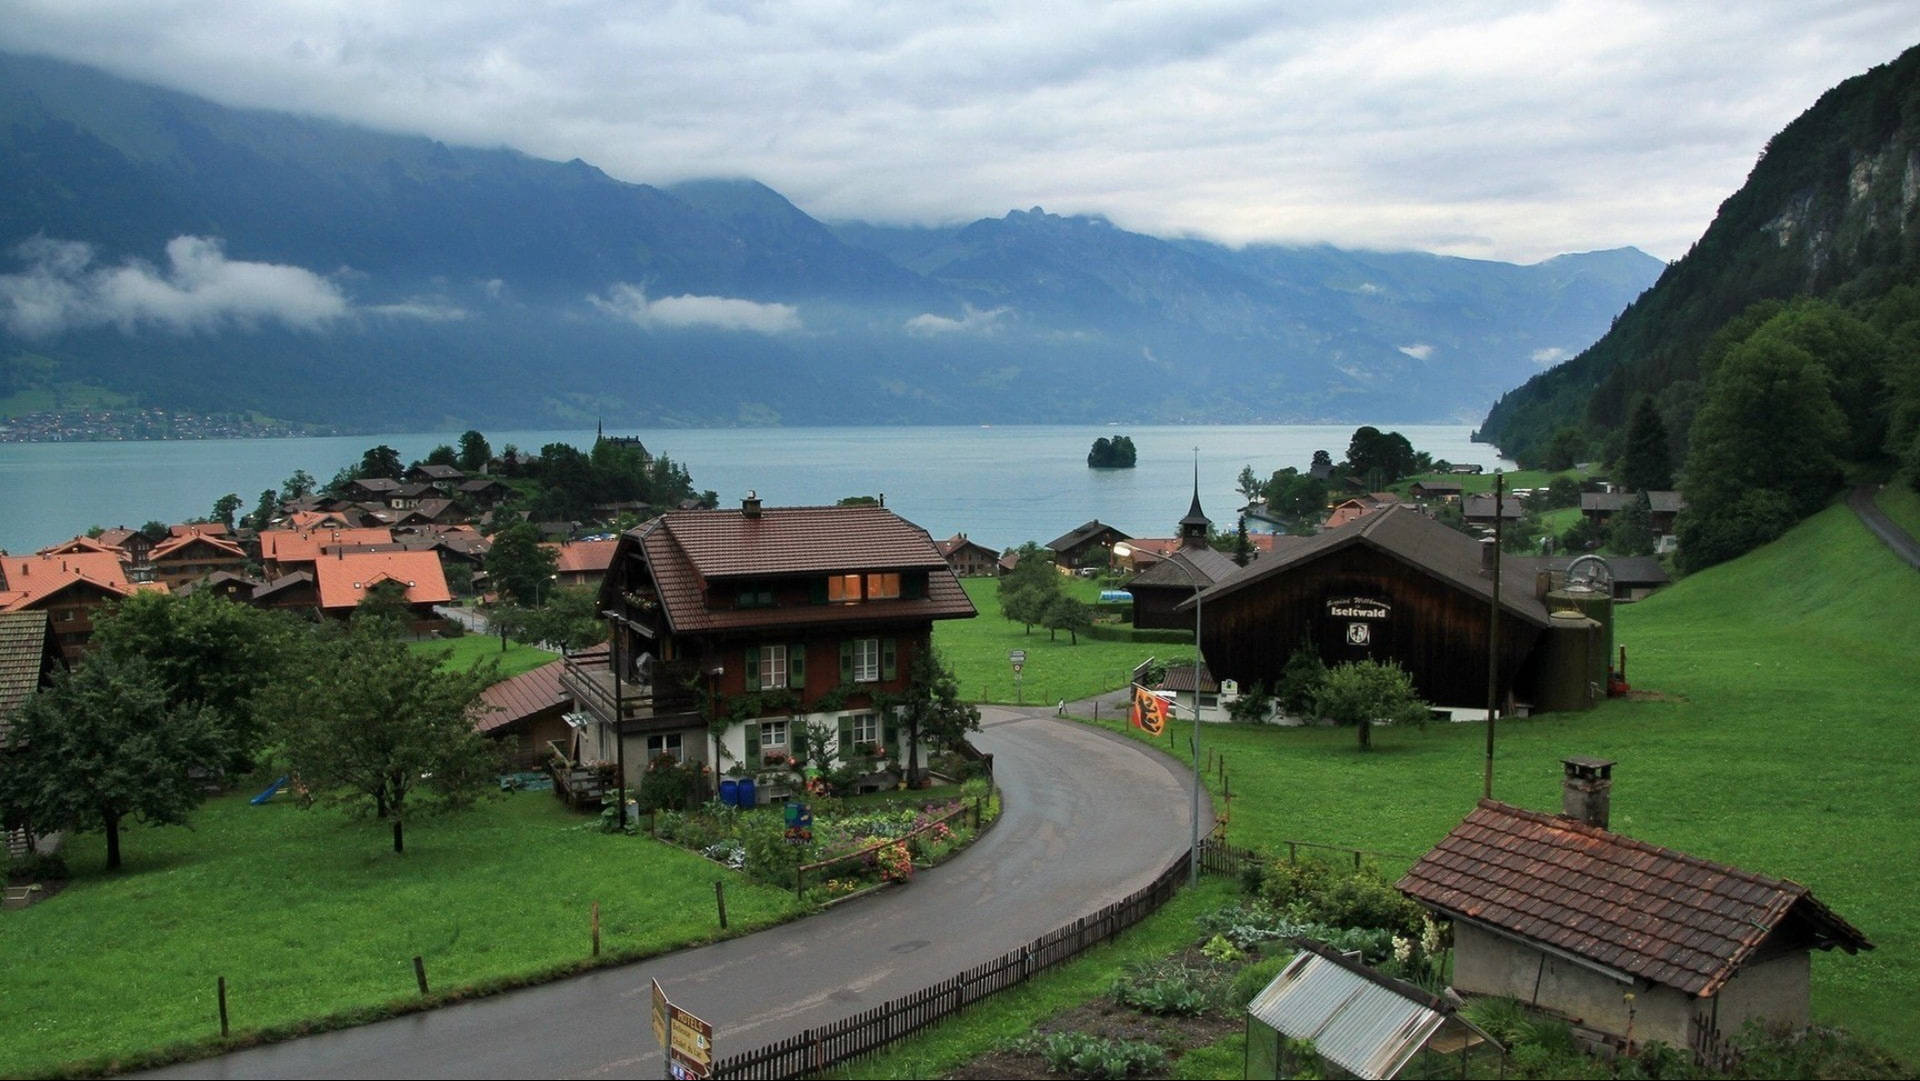 Scenic View Of Iseltwald Village, Switzerland Background